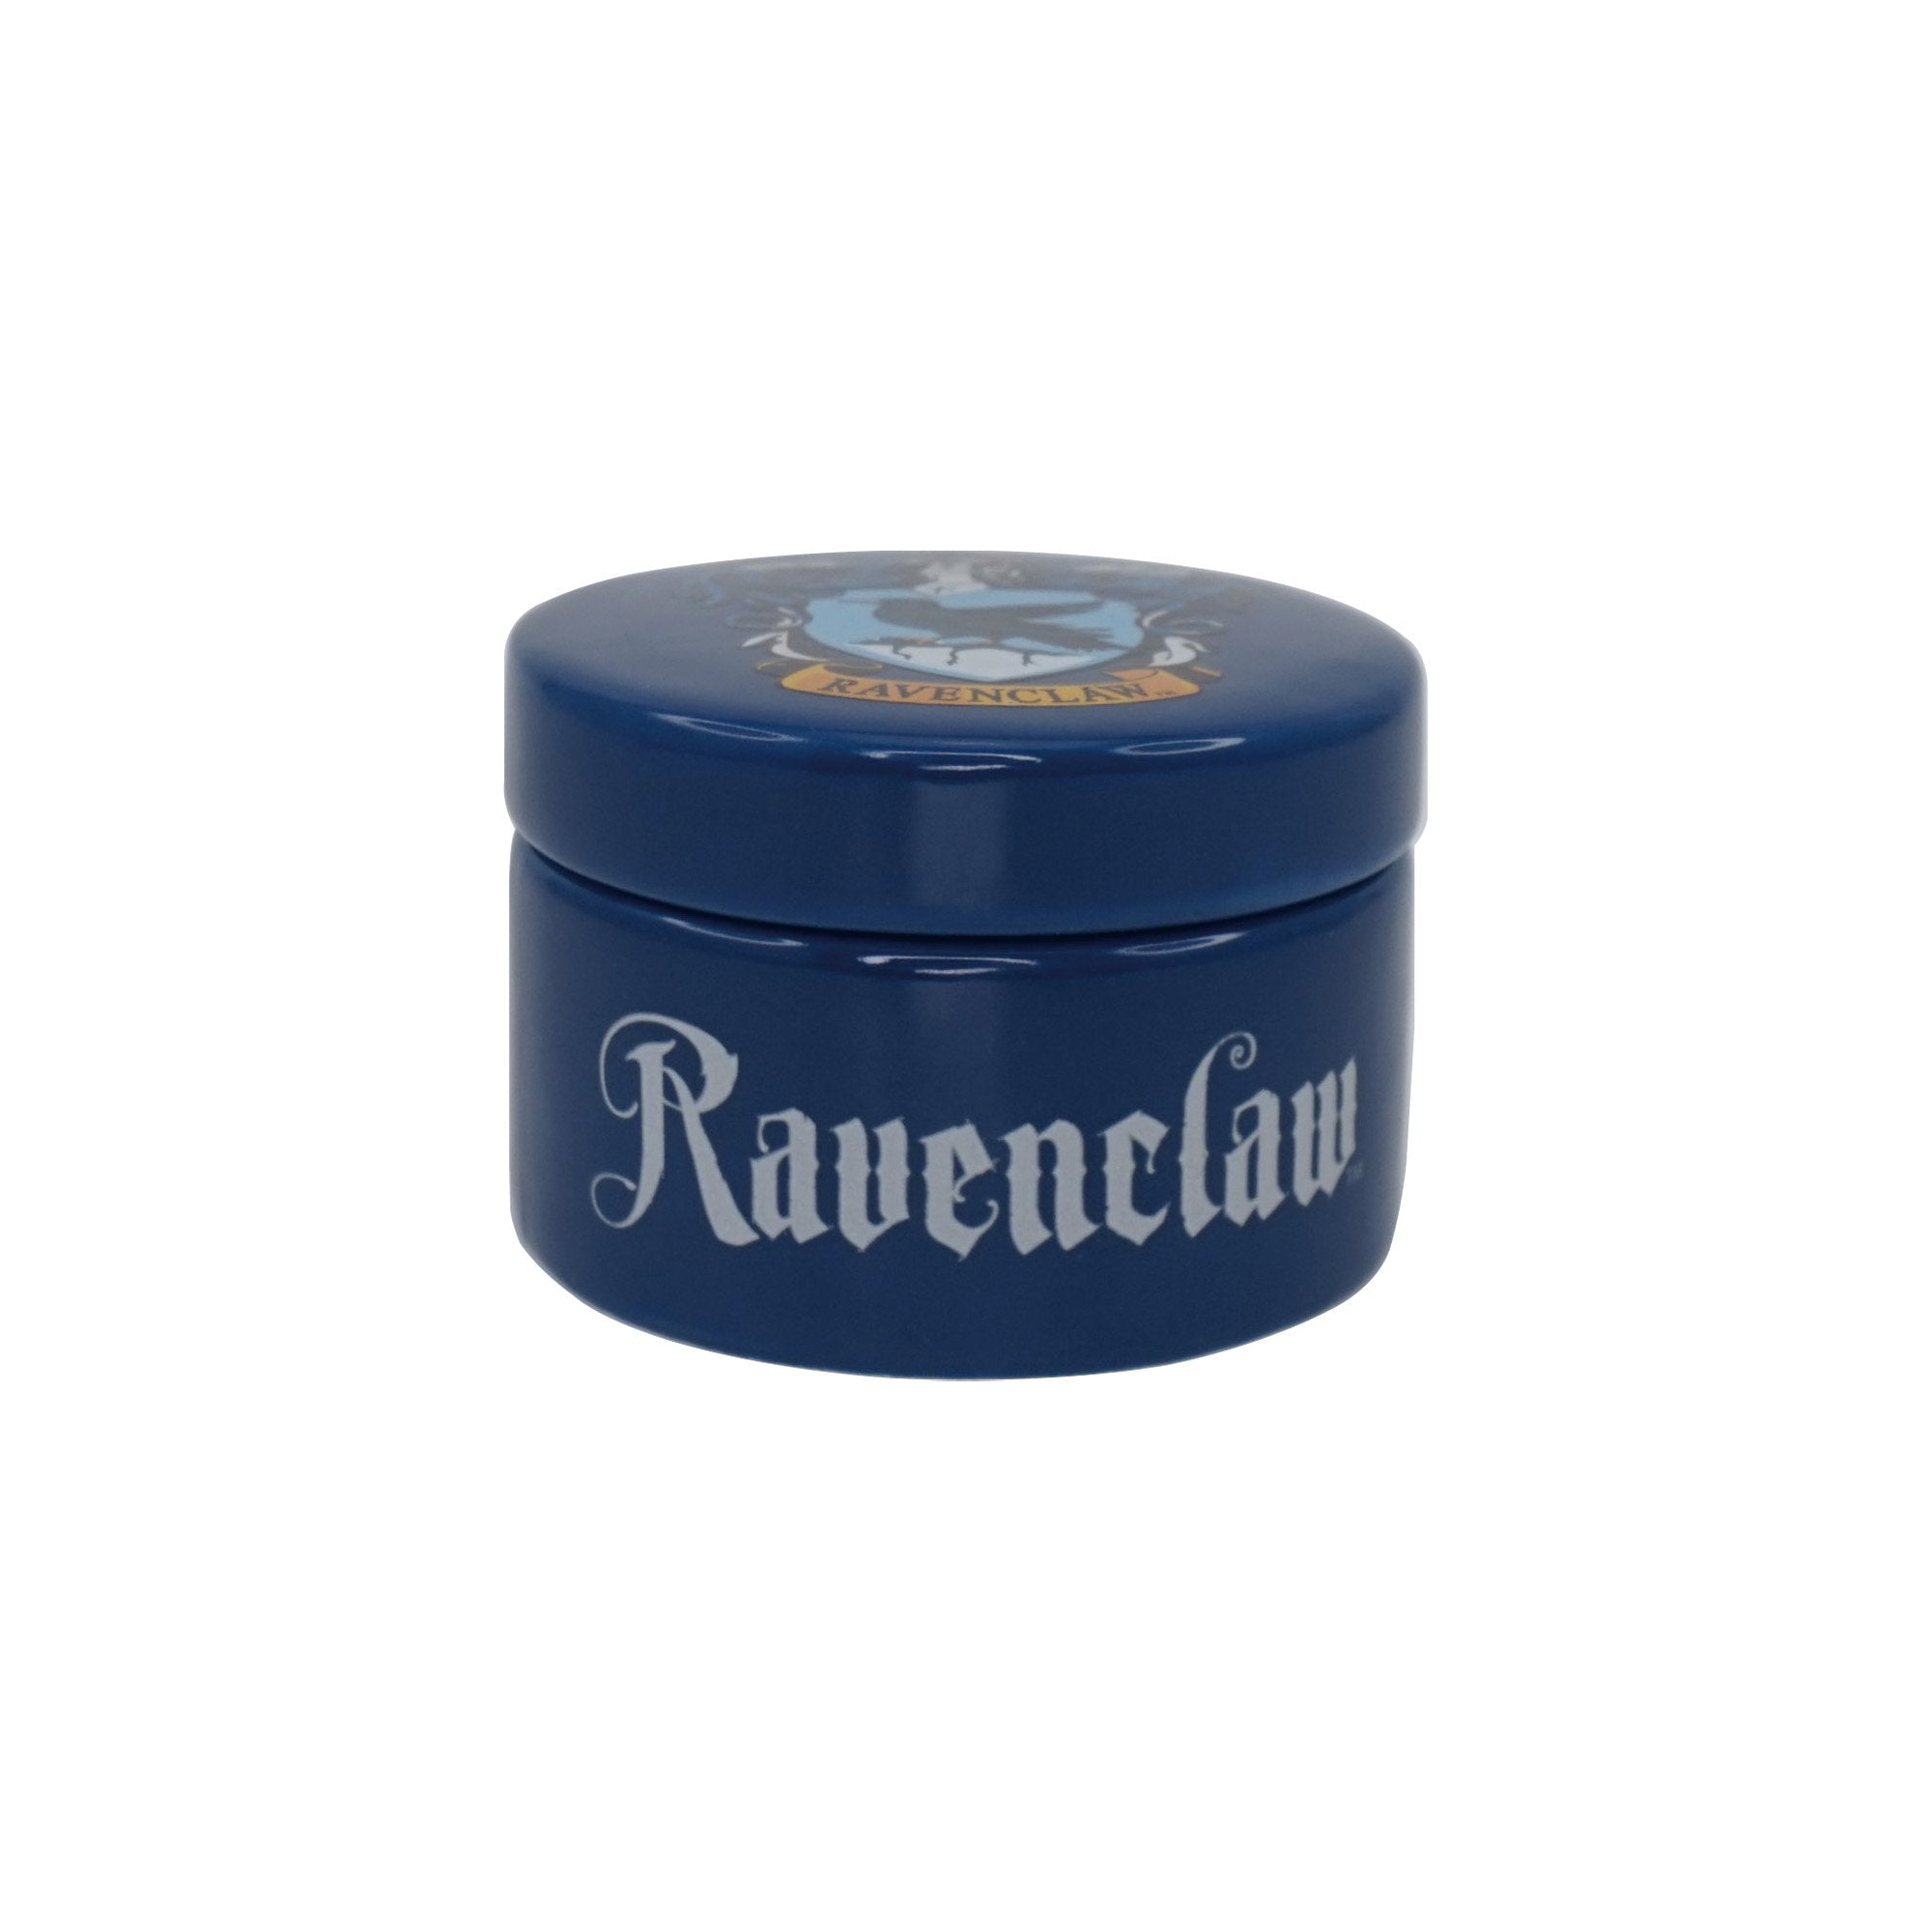 Box Round Ceramic (6cm) - Harry Potter (Ravenclaw)